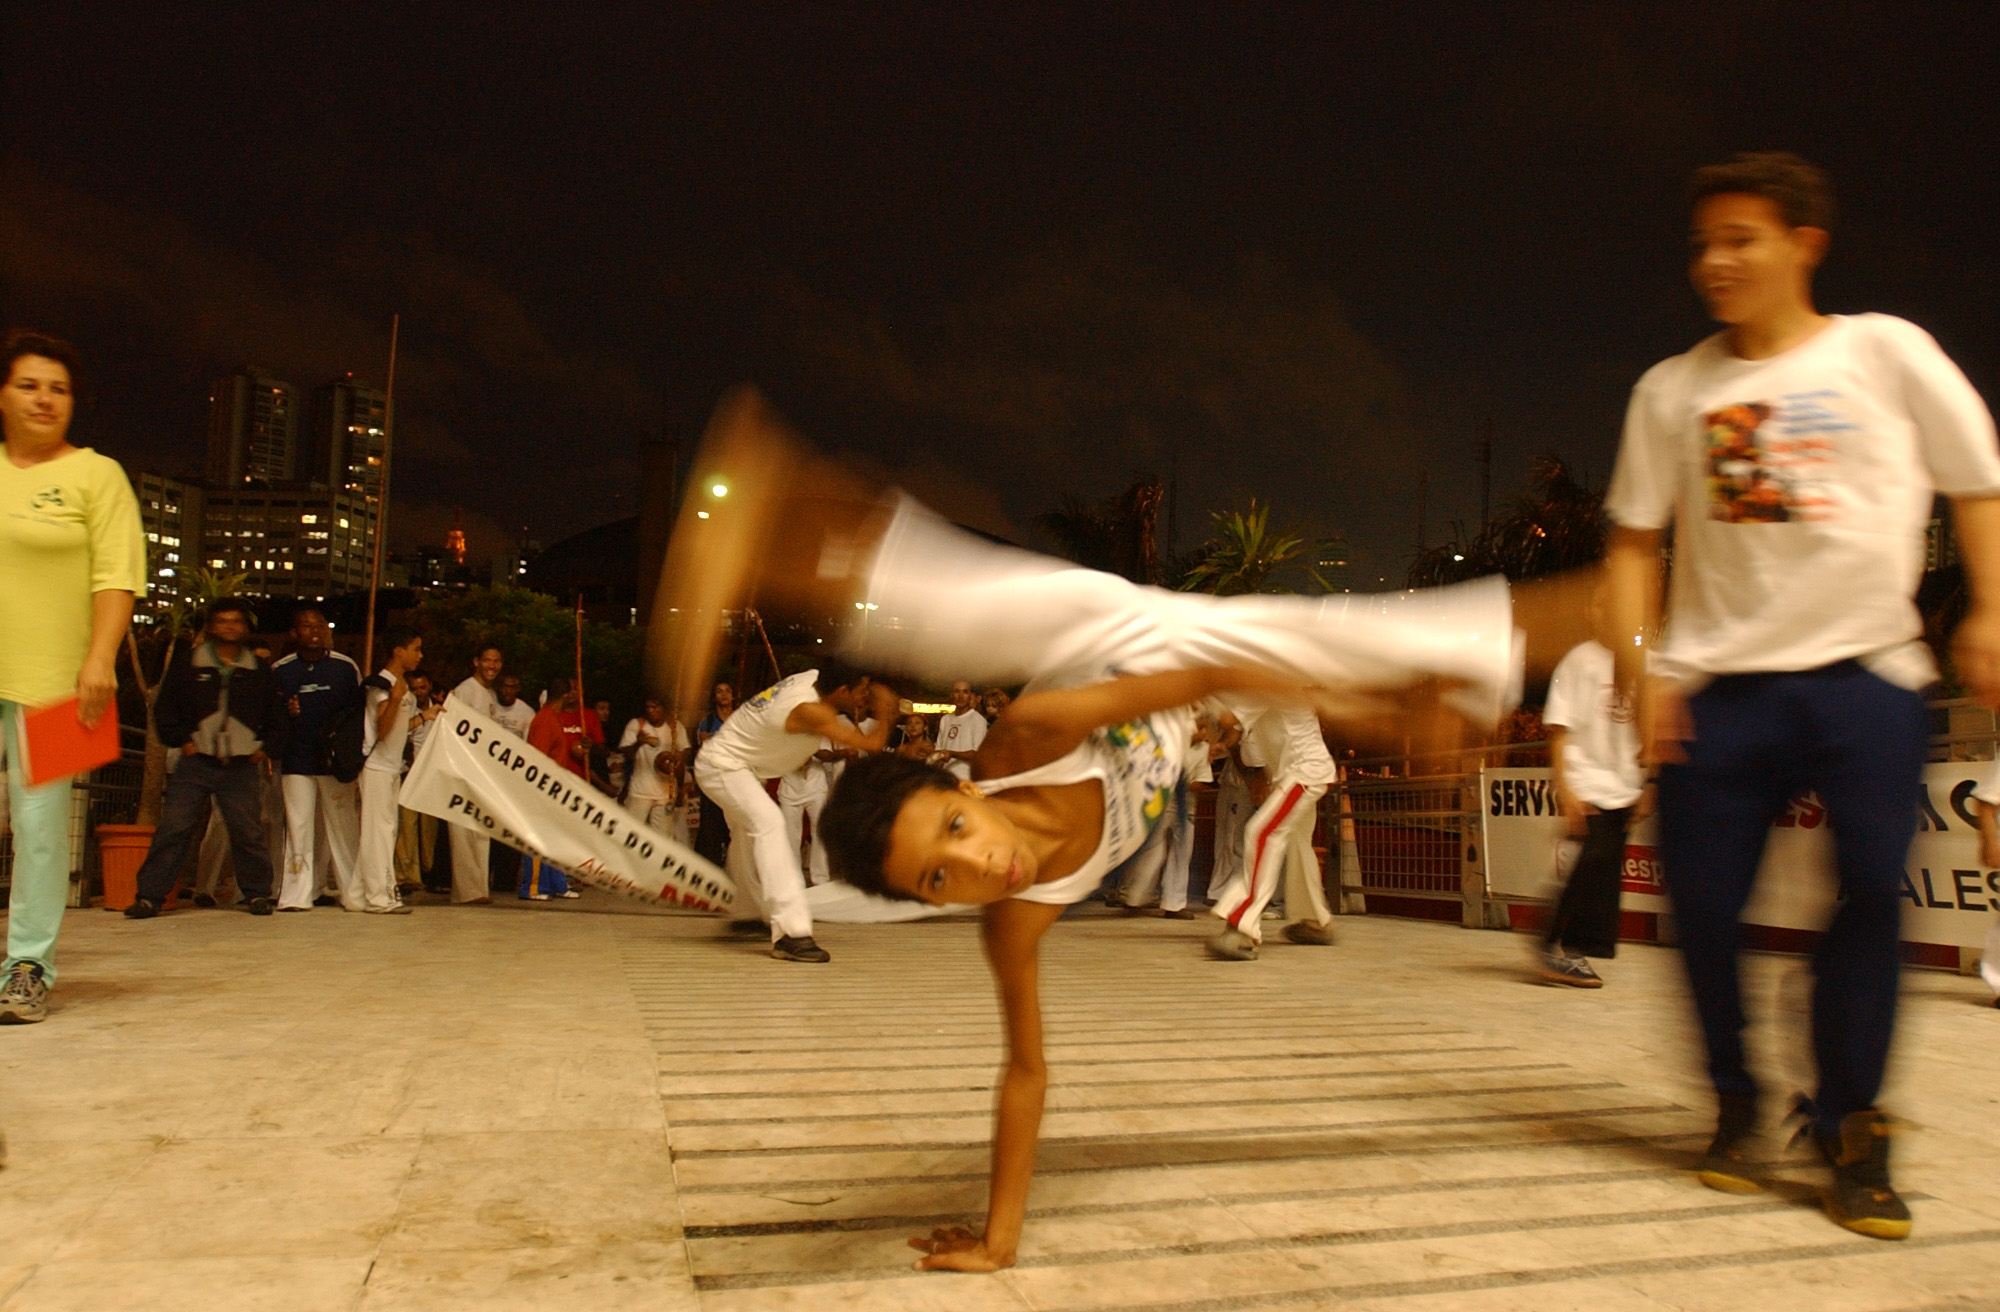 Apresentao de capoeira<a style='float:right;color:#ccc' href='https://www3.al.sp.gov.br/repositorio/noticia/hist/capoeiraA12mar04.jpg' target=_blank><i class='bi bi-zoom-in'></i> Clique para ver a imagem </a>